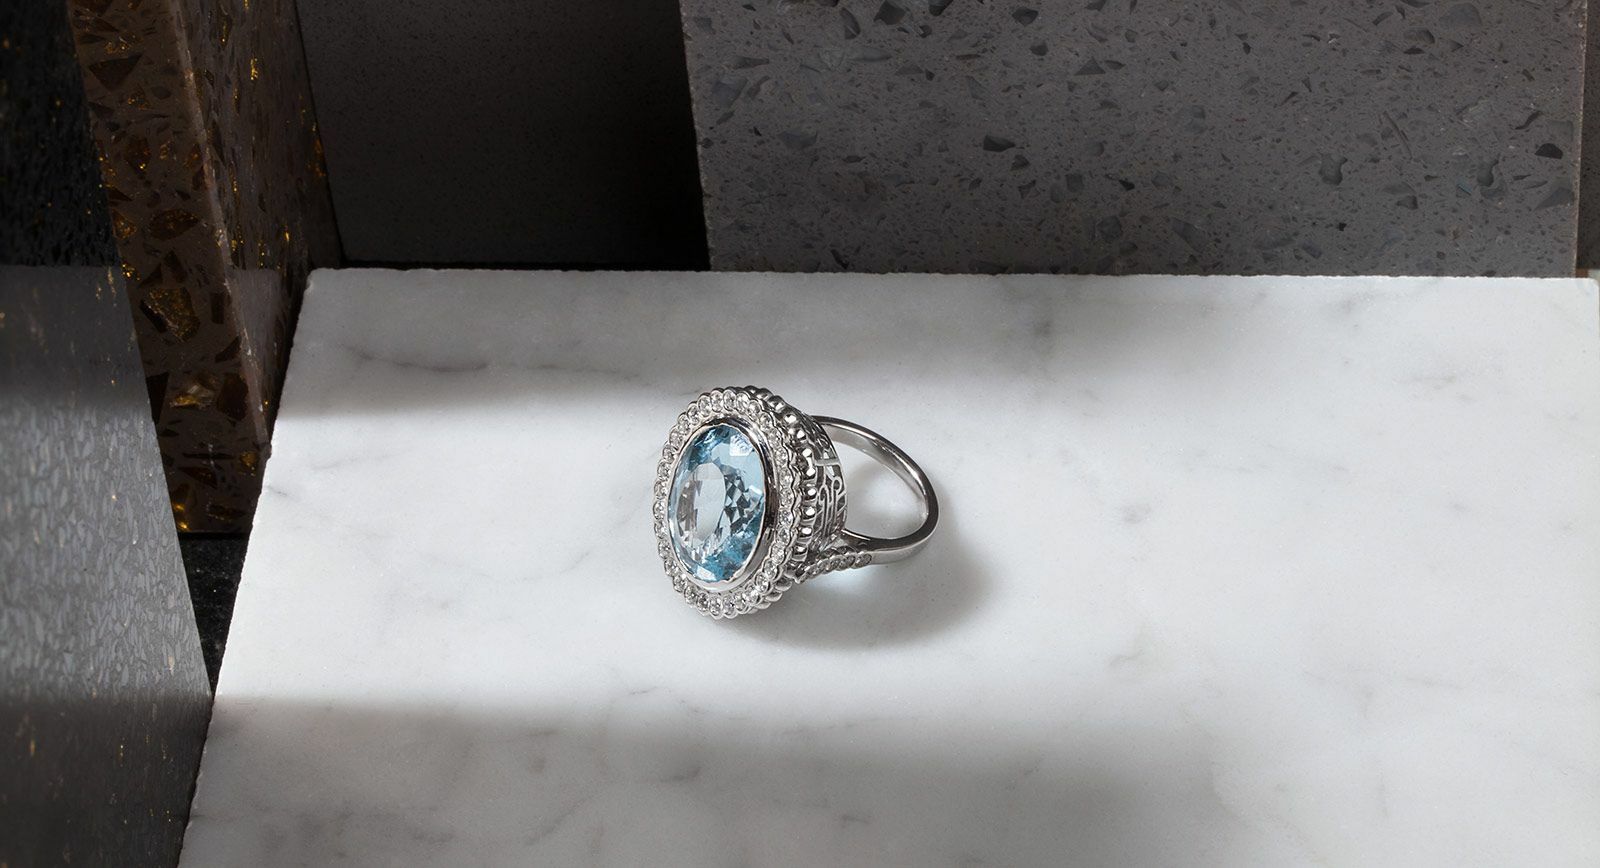 Maison Mirath Legend of Douma ring with a 22 carat aquamarine and diamonds